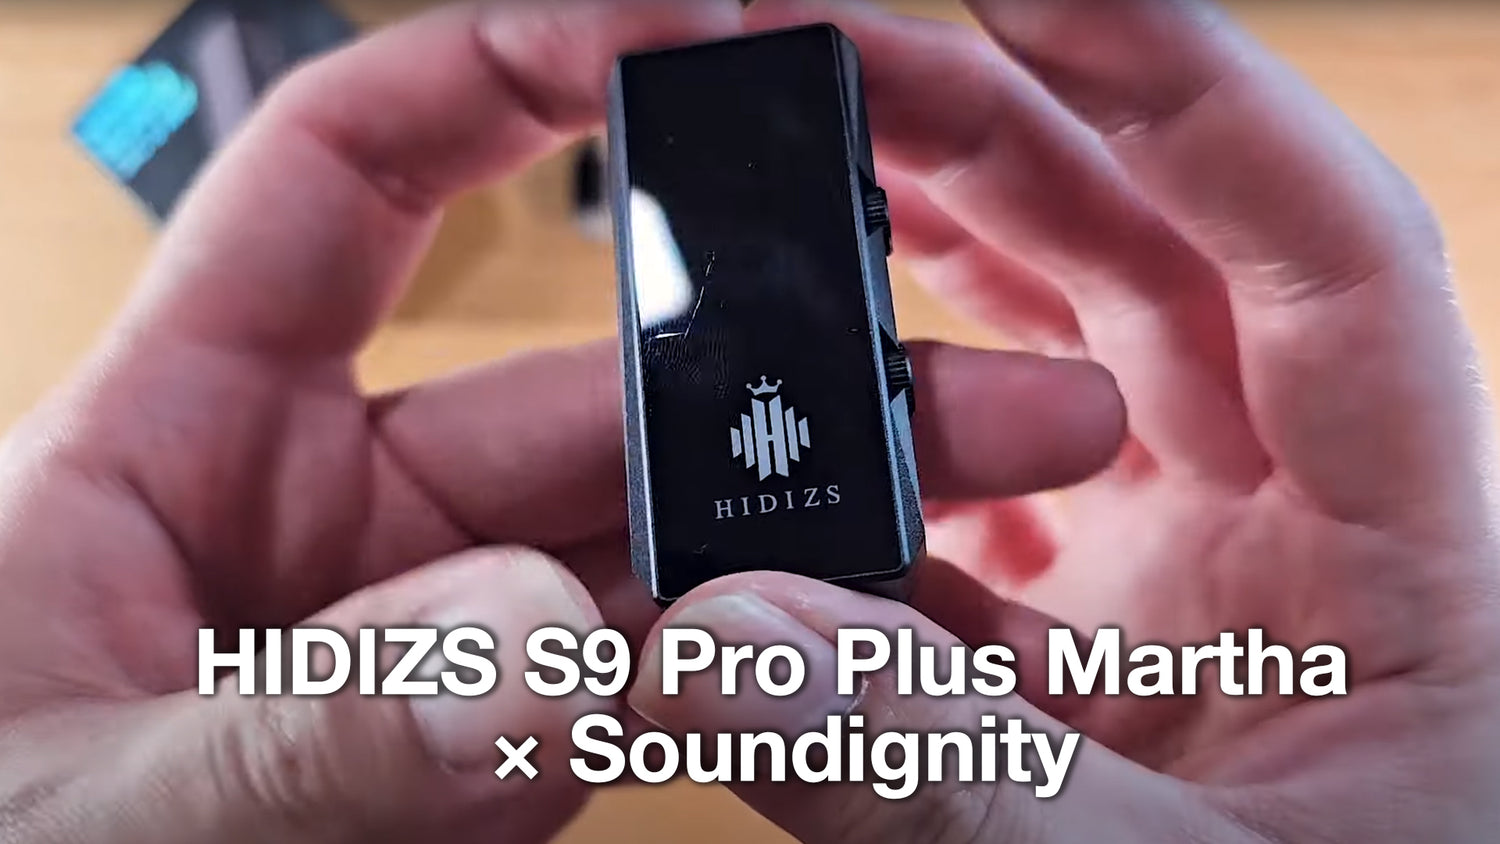 HIDIZS S9 Pro Plus Martha Review - Soundignity